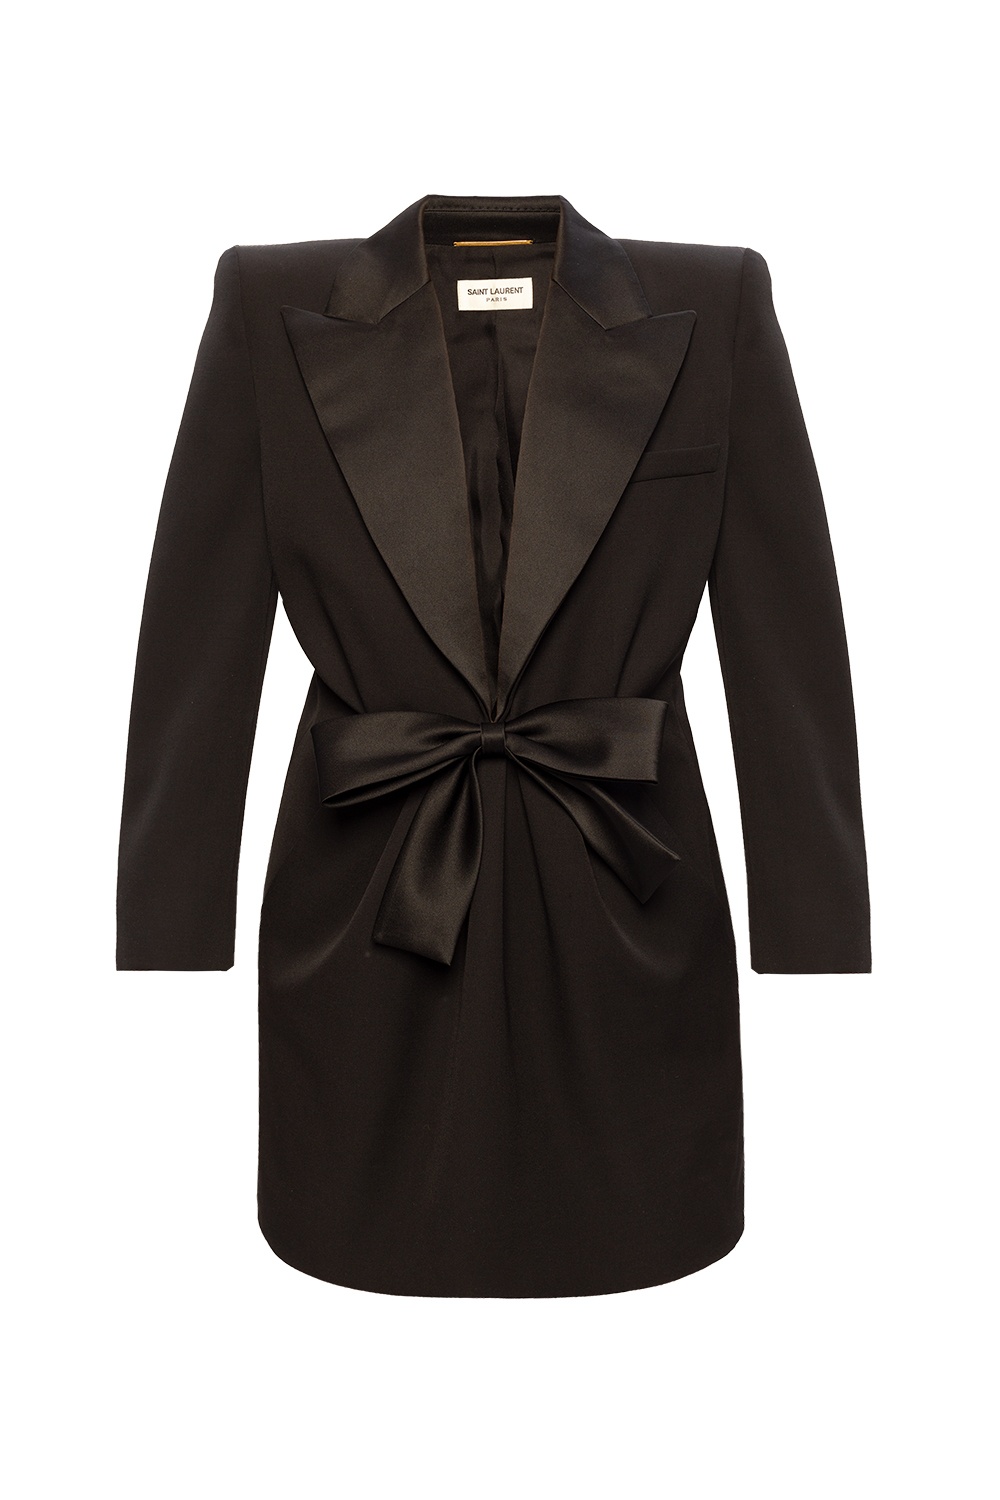 Saint Laurent Tuxedo dress | Women's Clothing | Vitkac